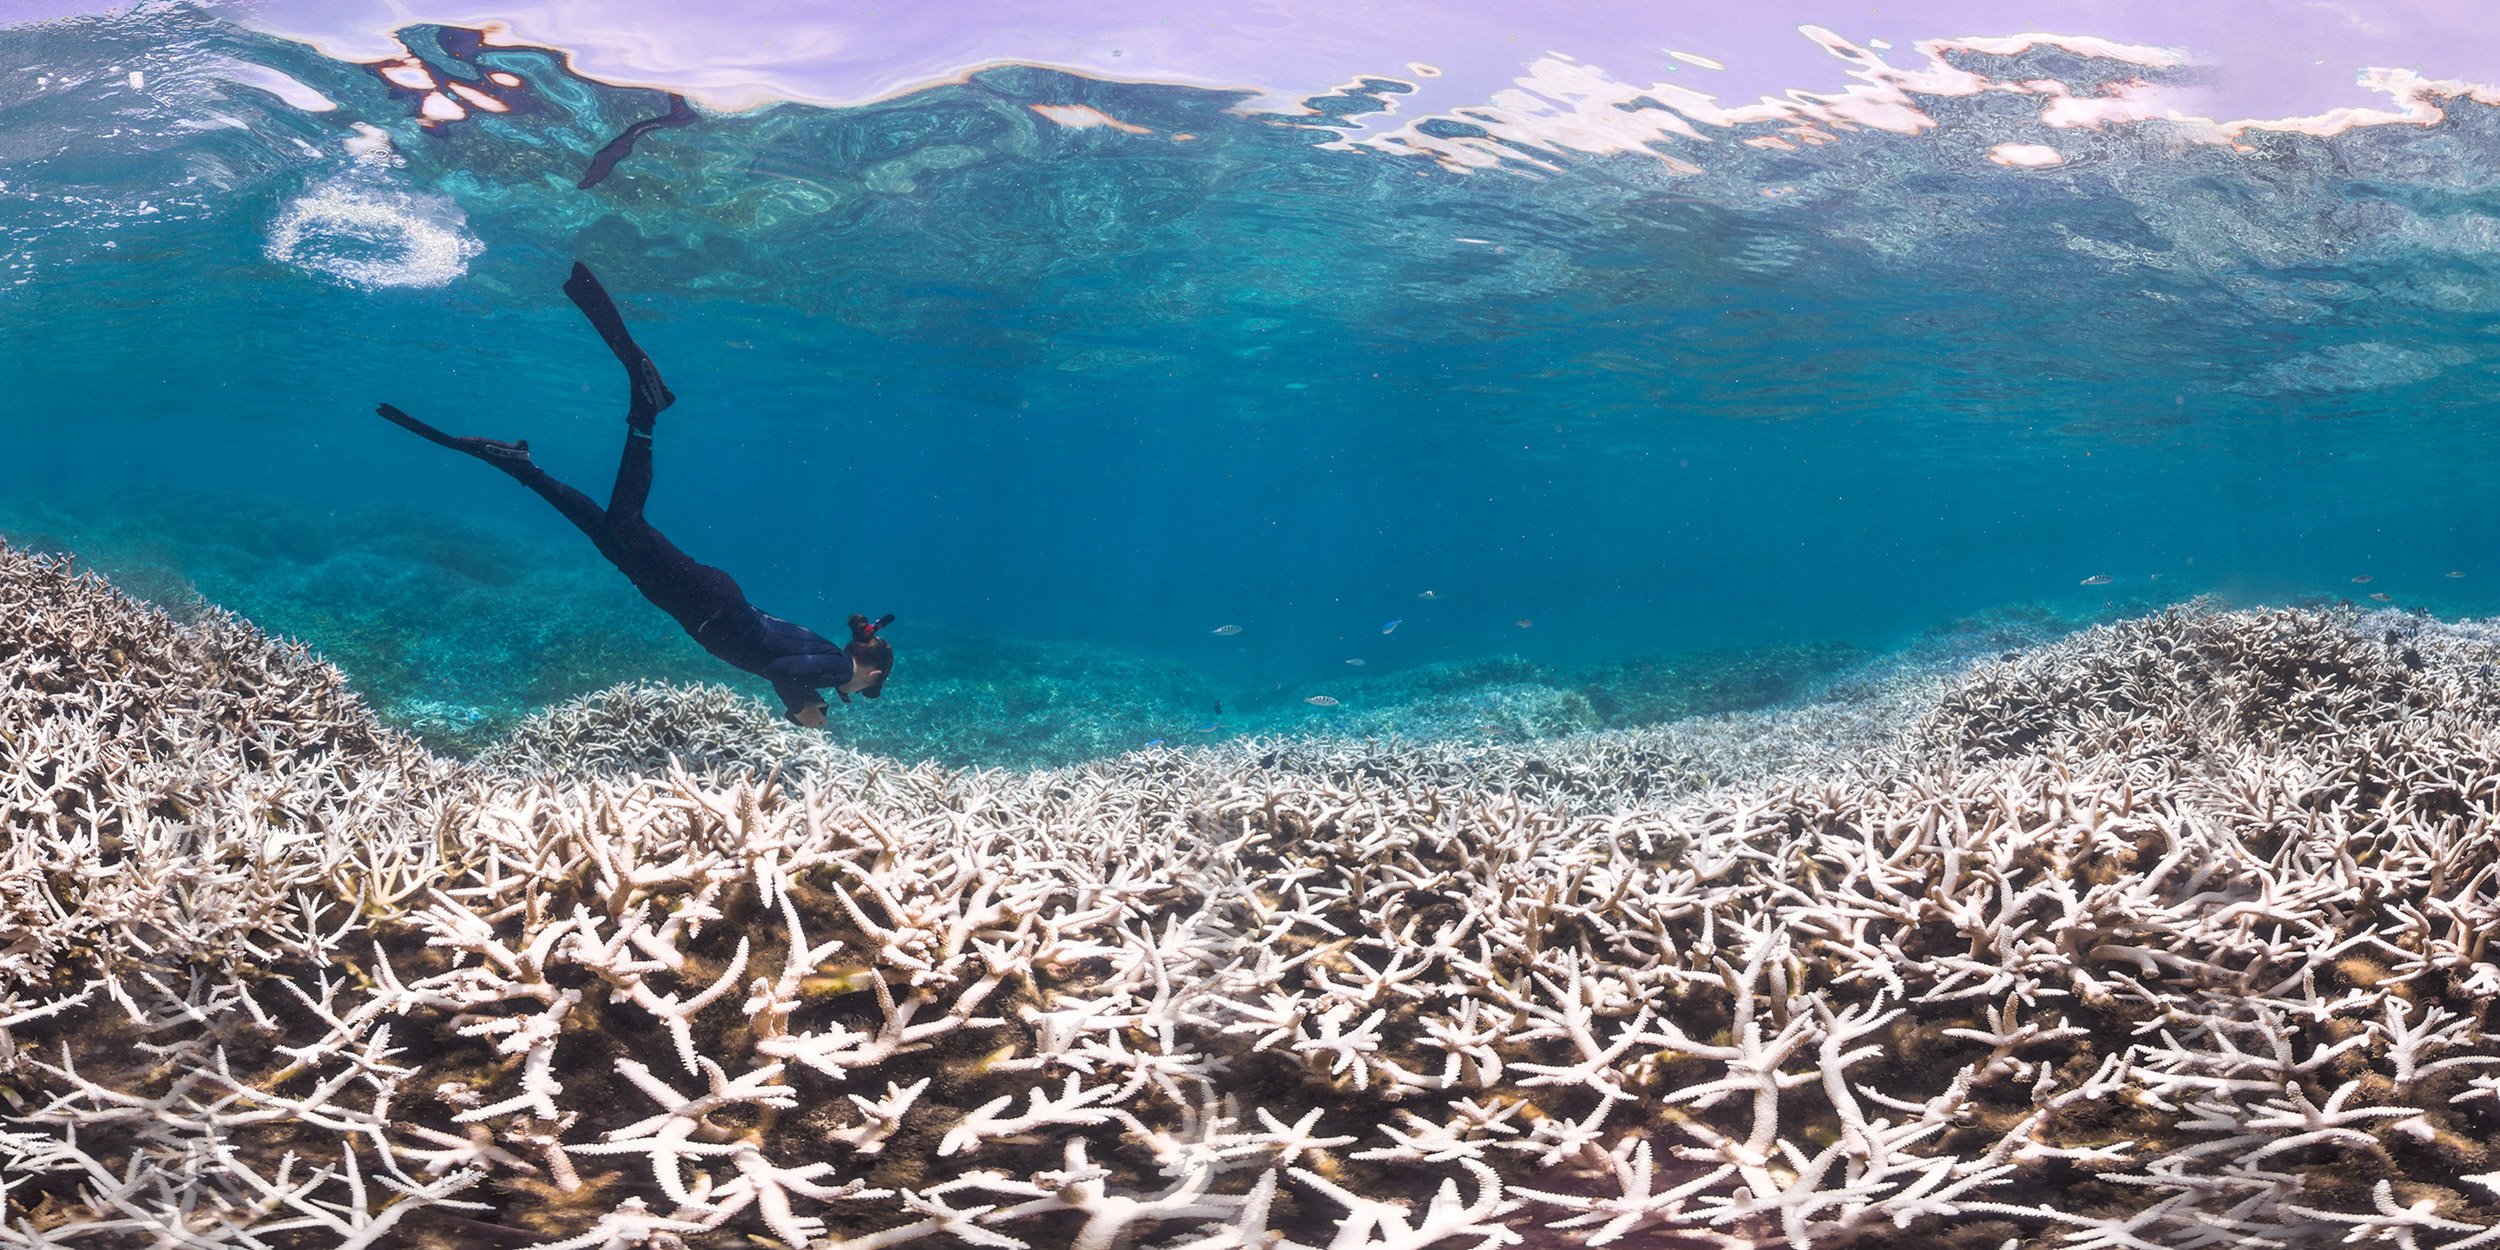 037-Coral-bleaching-in-American-Samoa-©-Underwater-Earth_ XL-Catlin-Seaview-Survey.jpg